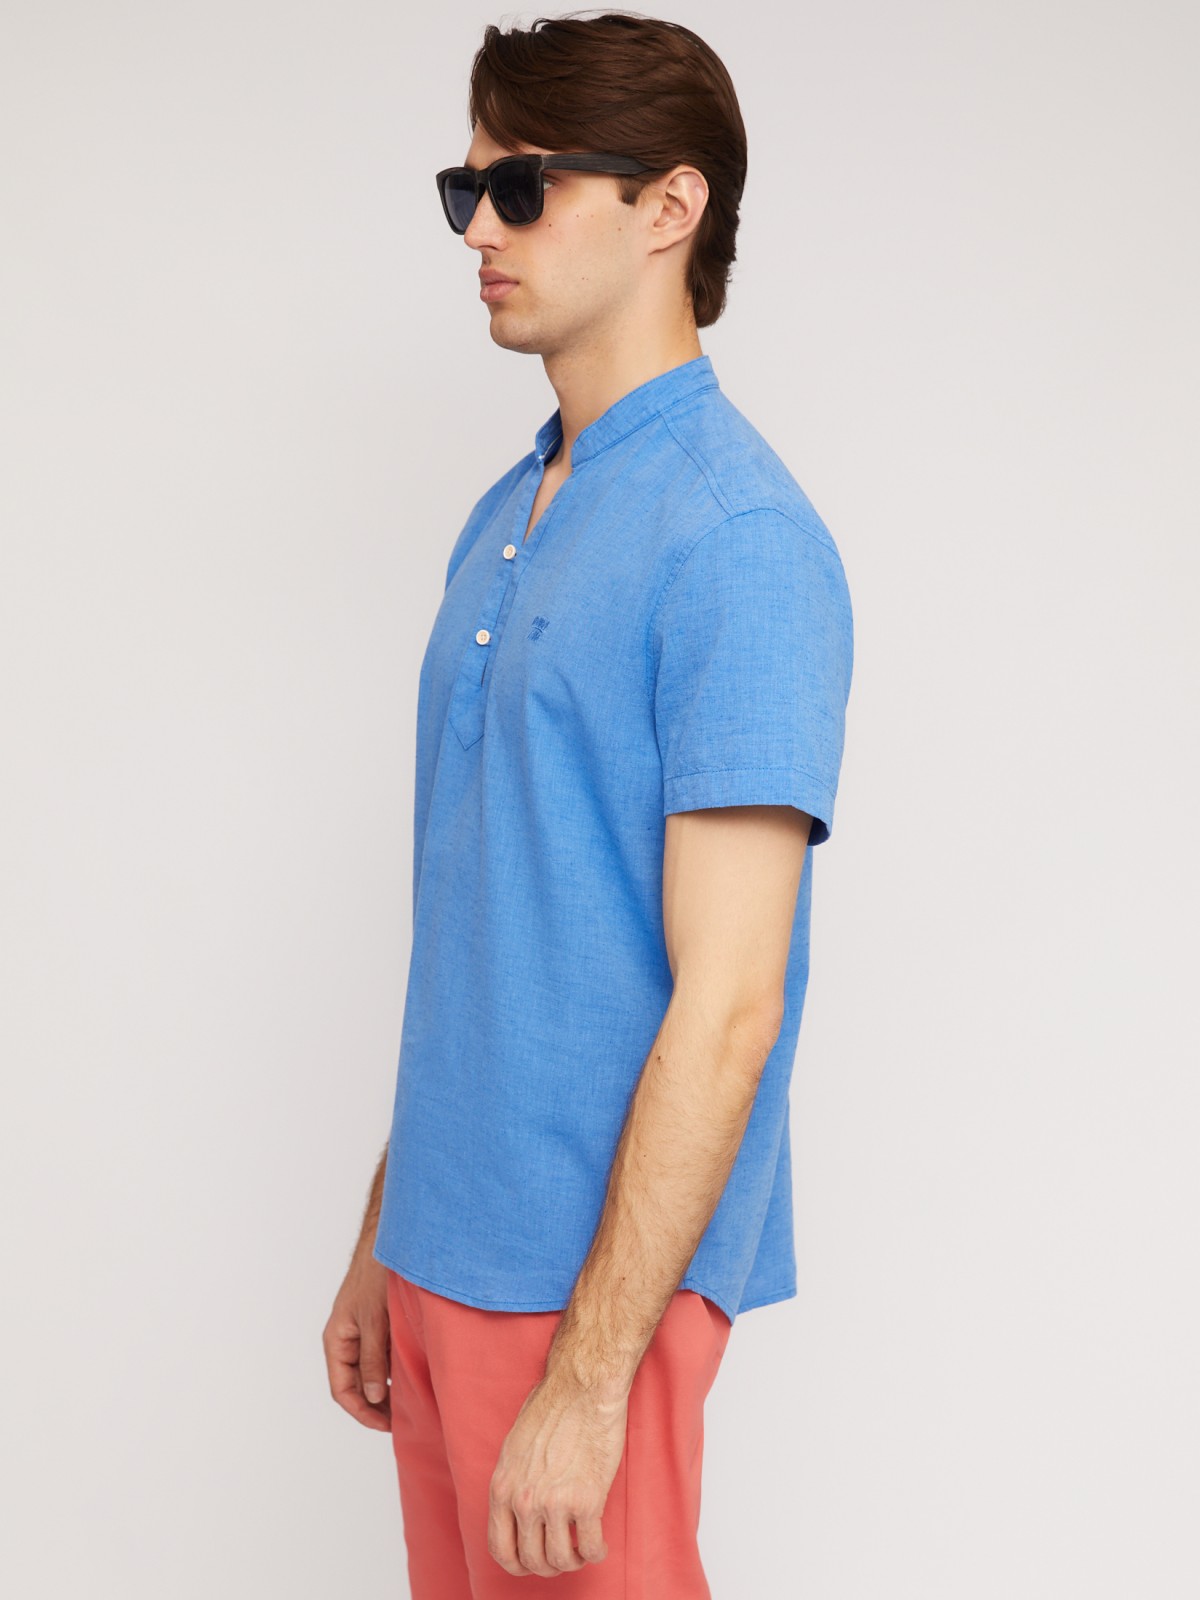 Льняная рубашка с коротким рукавом zolla 014242216073, цвет светло-голубой, размер M - фото 3